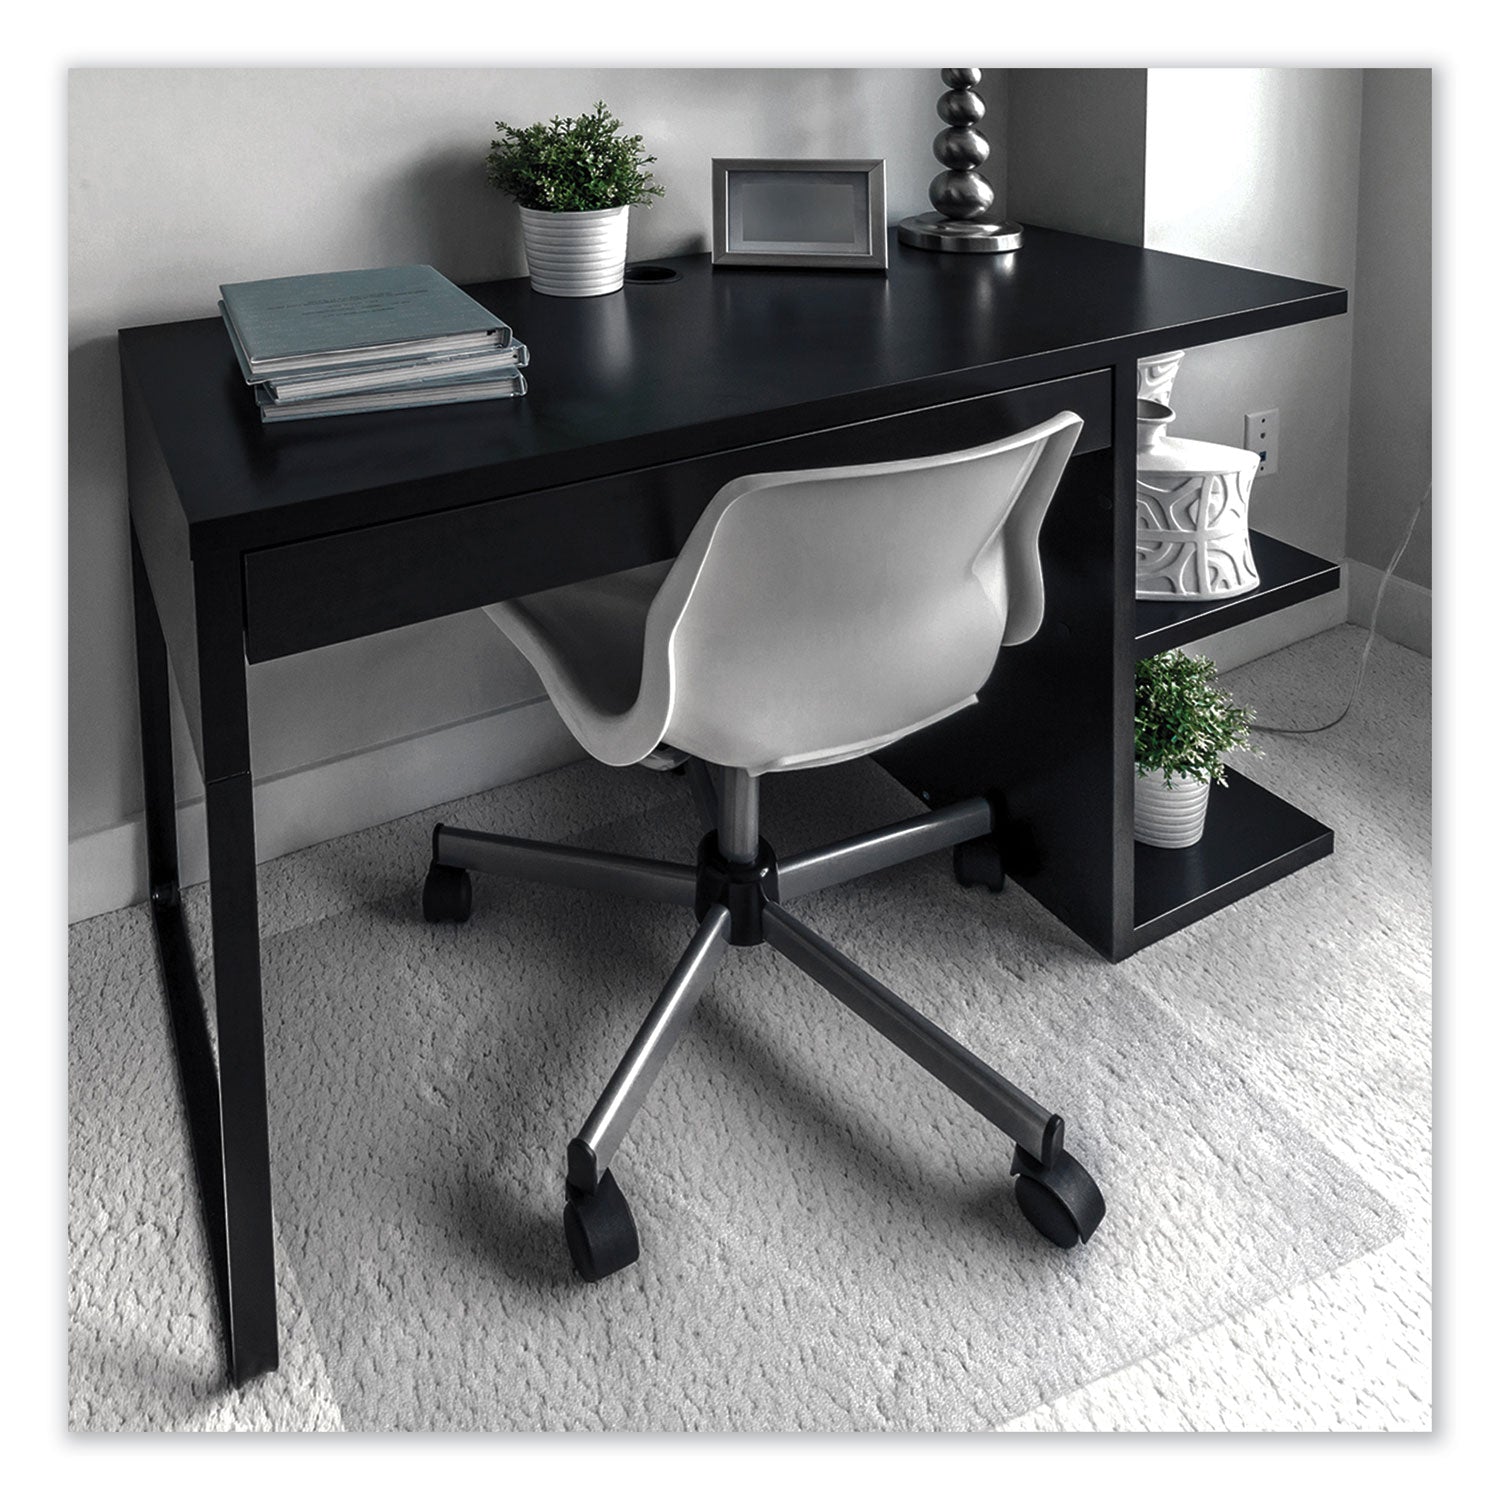 cleartex-unomat-anti-slip-chair-mat-for-hard-floors-flat-pile-carpets-35-x-47-clear_flrec128920era - 3